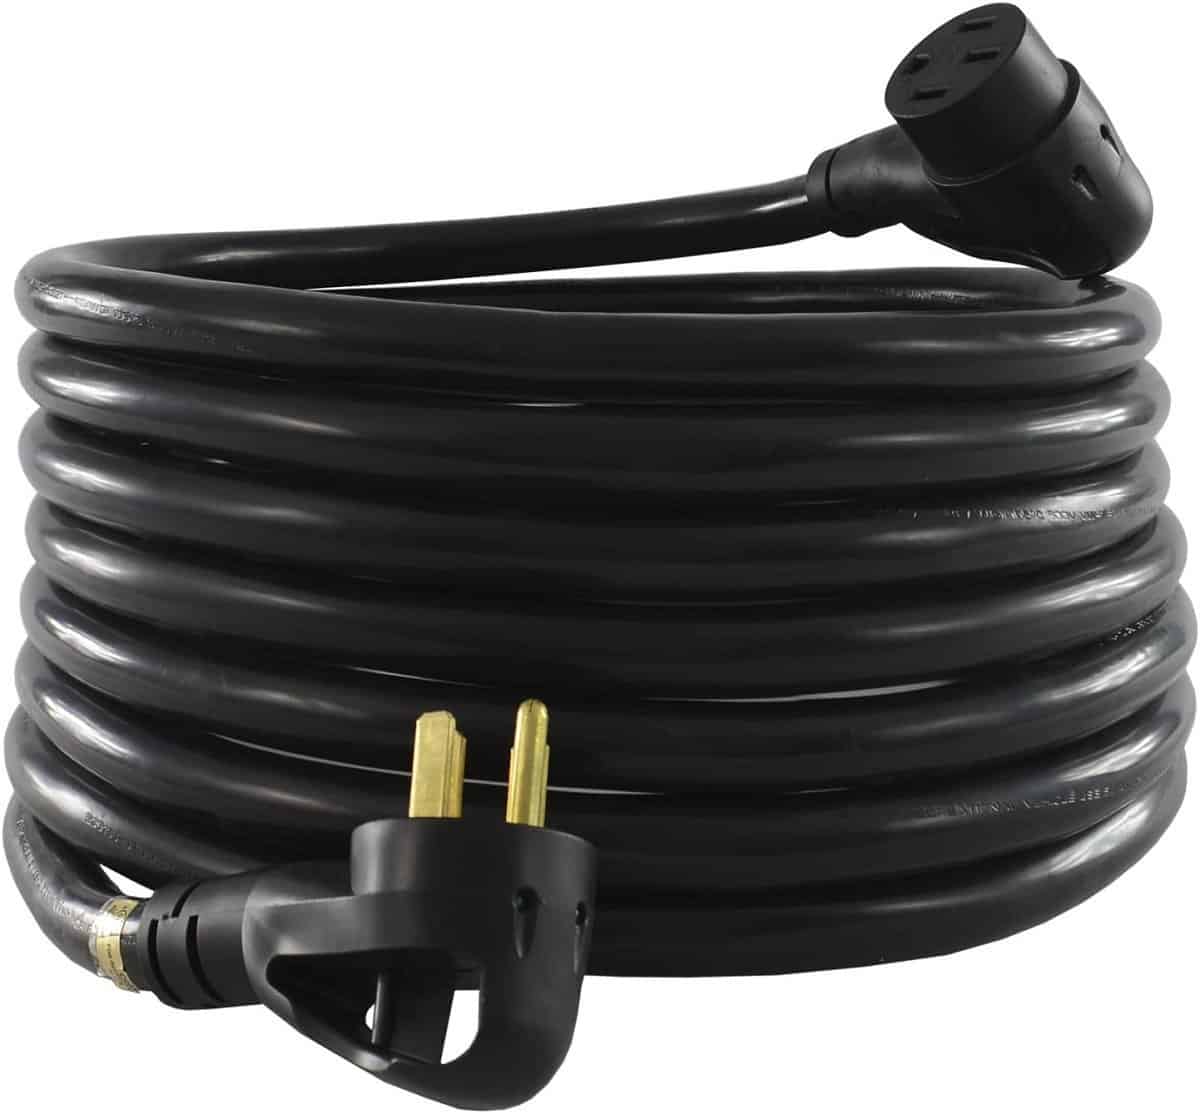 A Conntek 50 amp extension cord